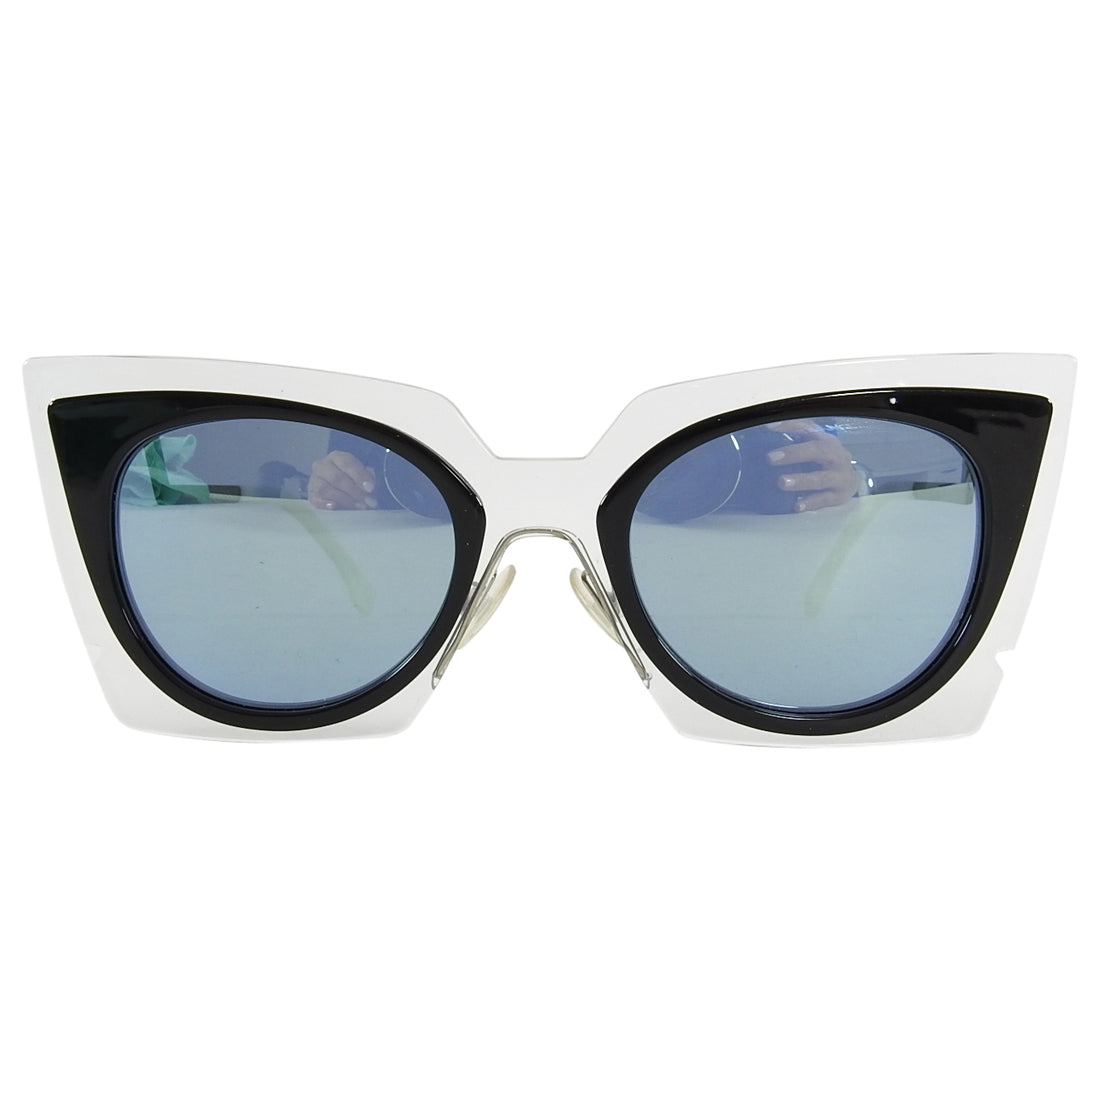 fendi sunglasses 2015